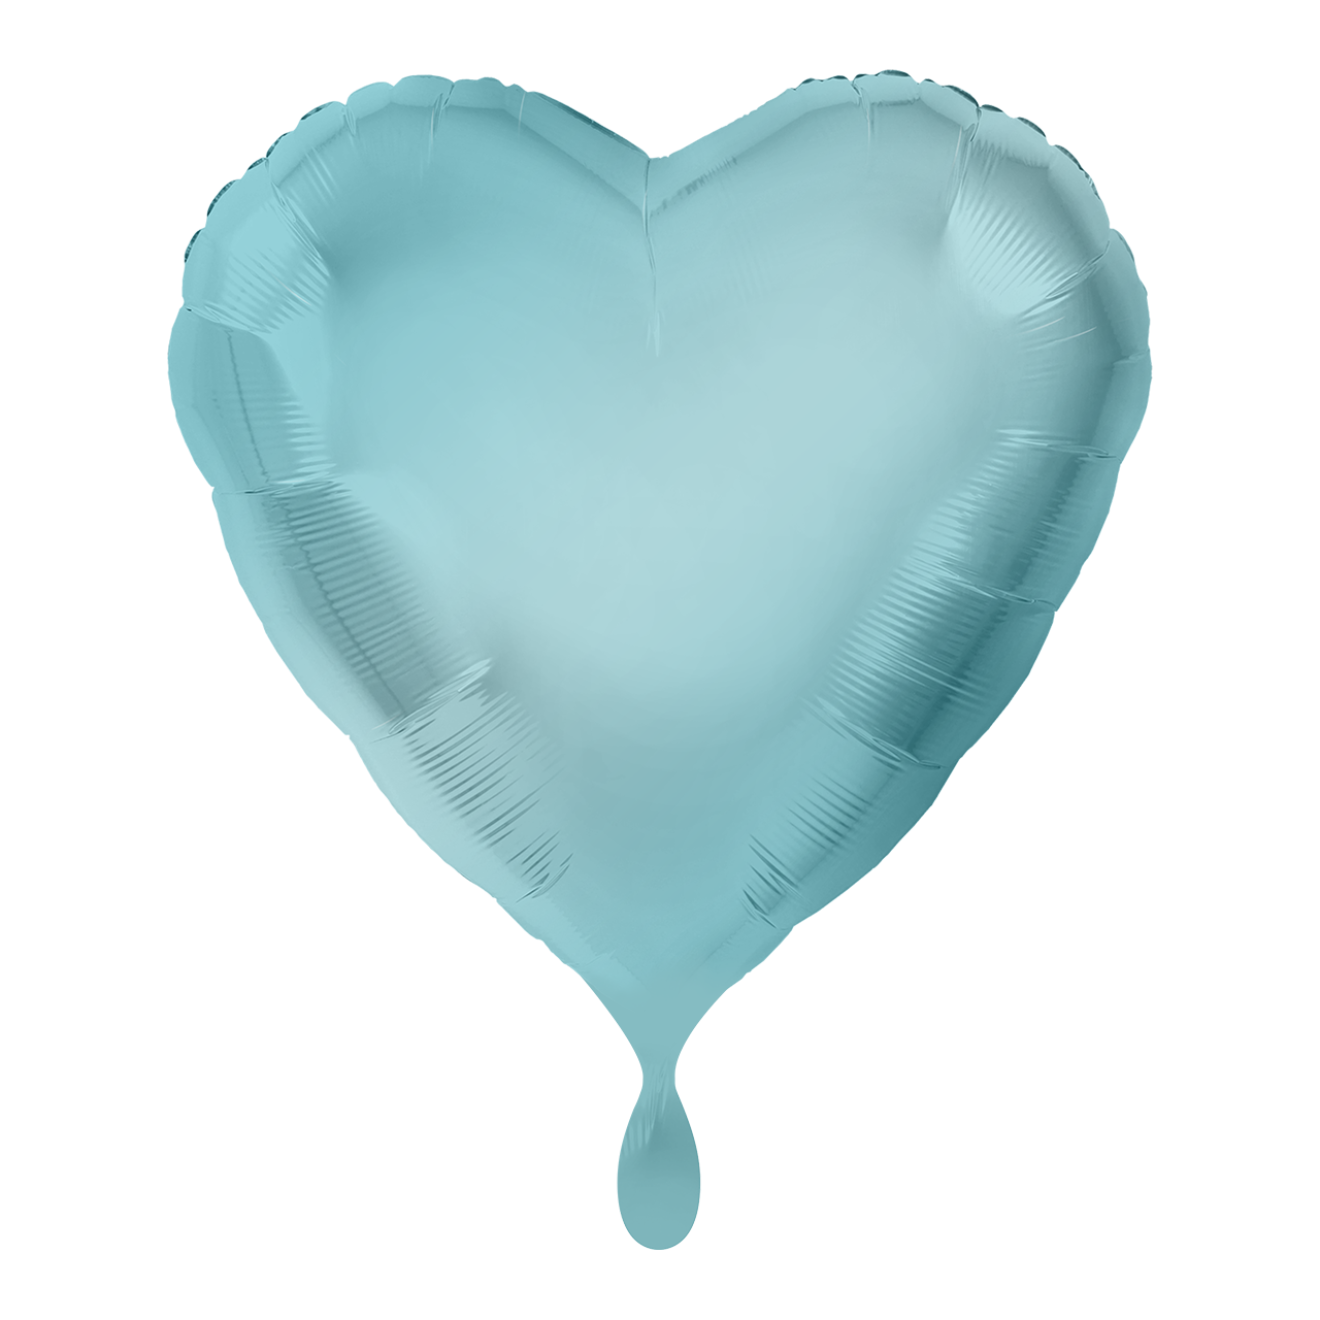 1 Balloon - Herz - Hellblau